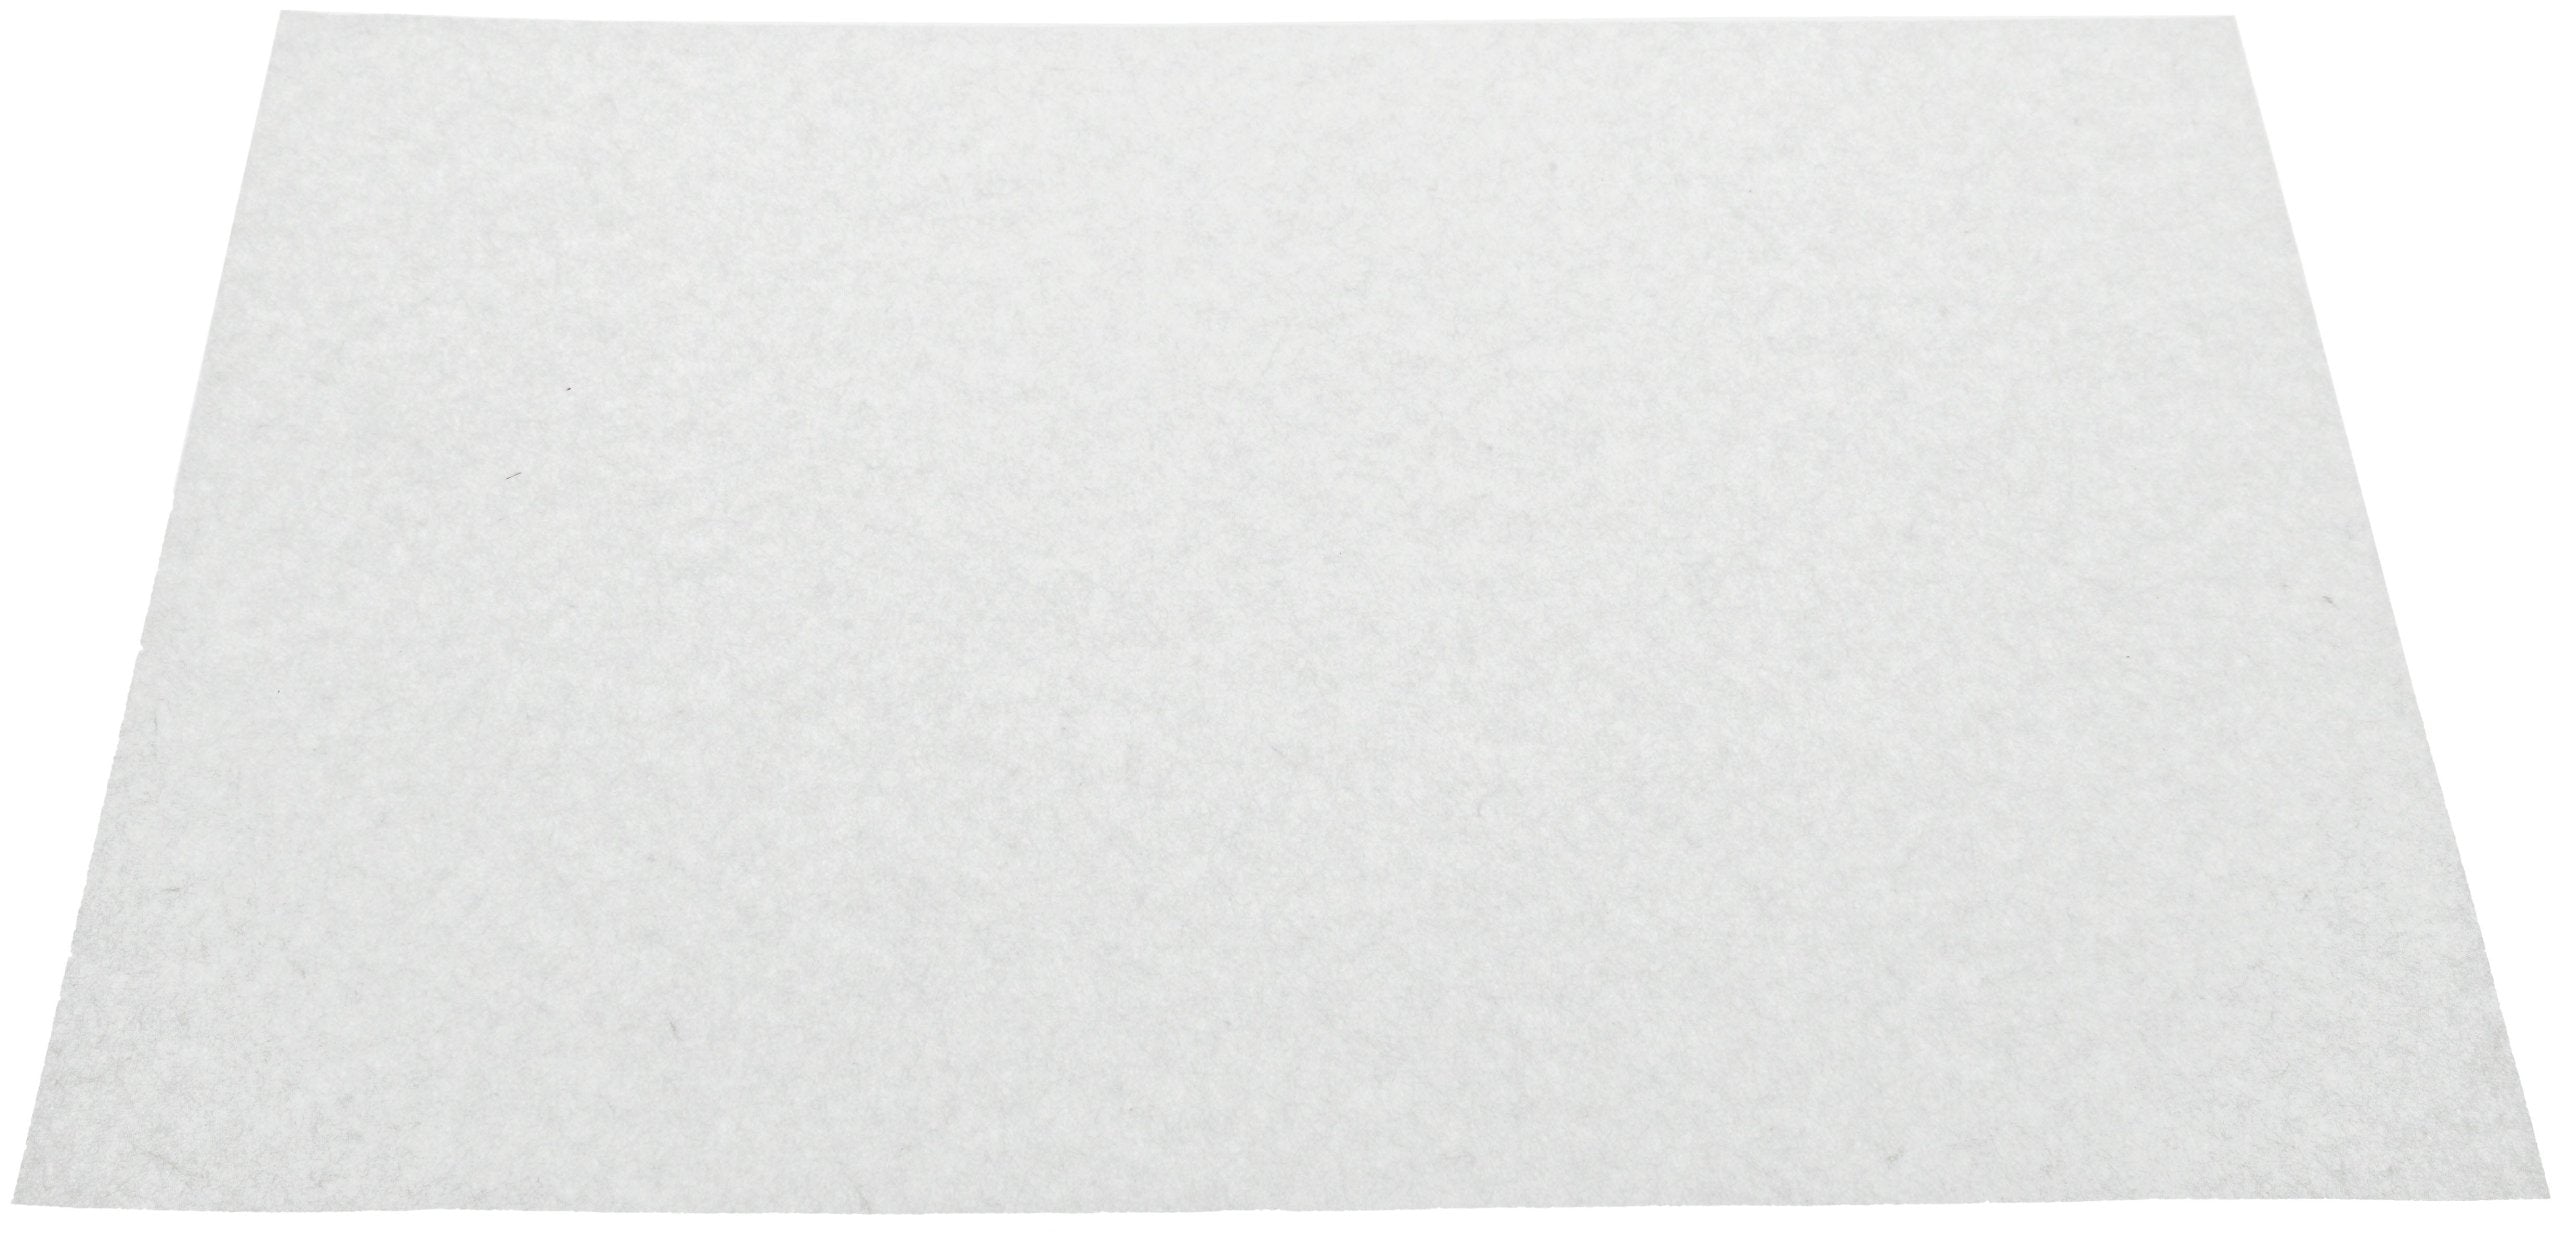 Whatman 10427818 Blotting Paper, Pure Cellulose, Grade GB003 Sheets, 20 x 20cm, 100/pk